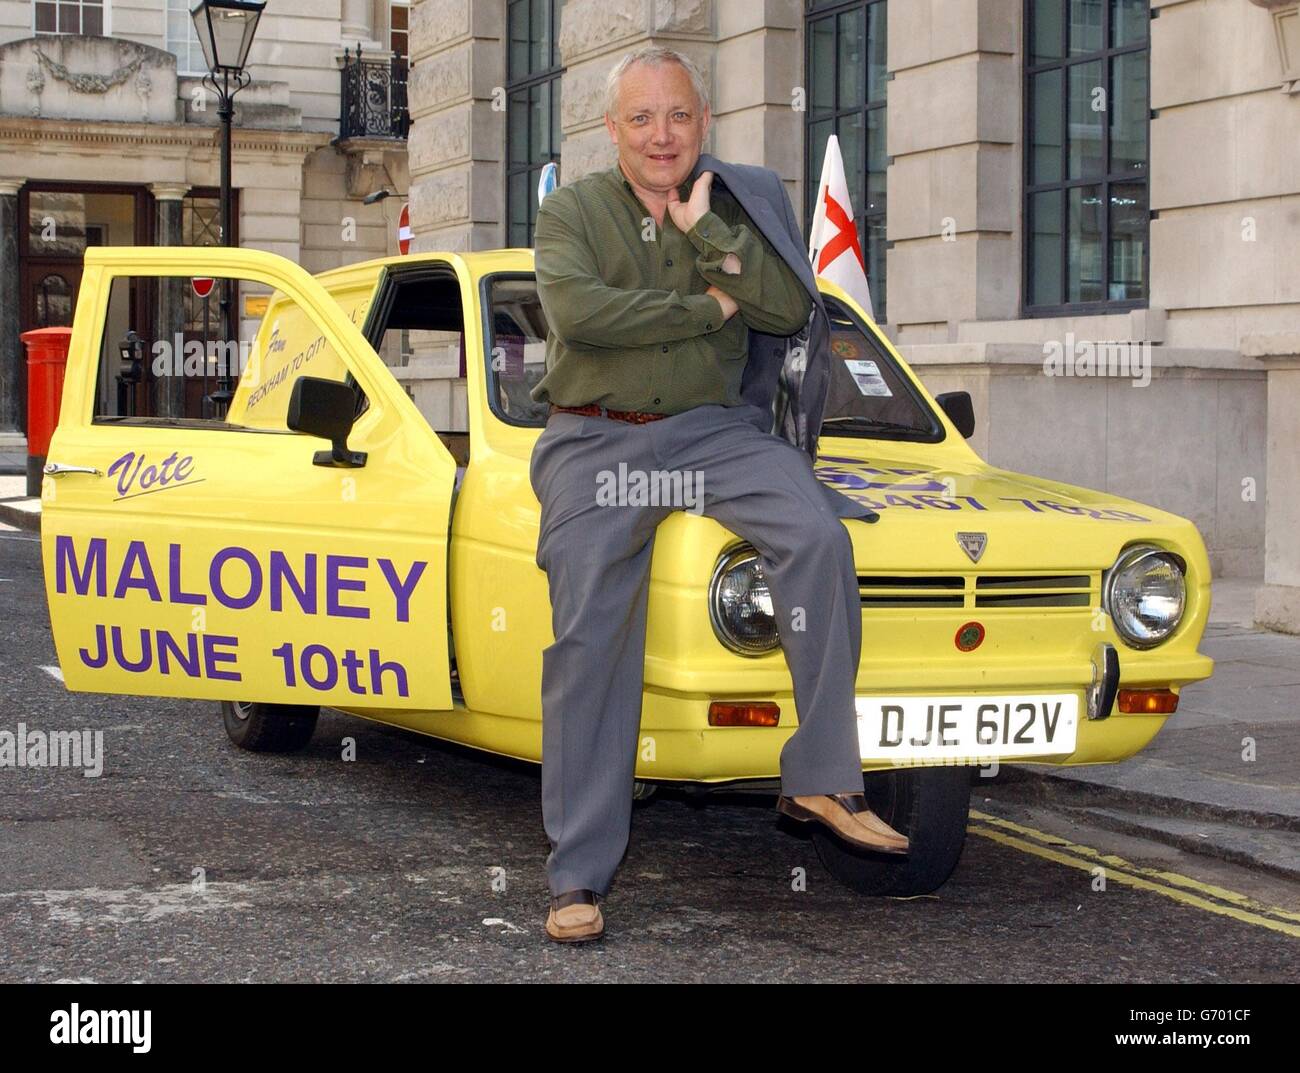 Frank Maloney - Sport Aid Stock Photo